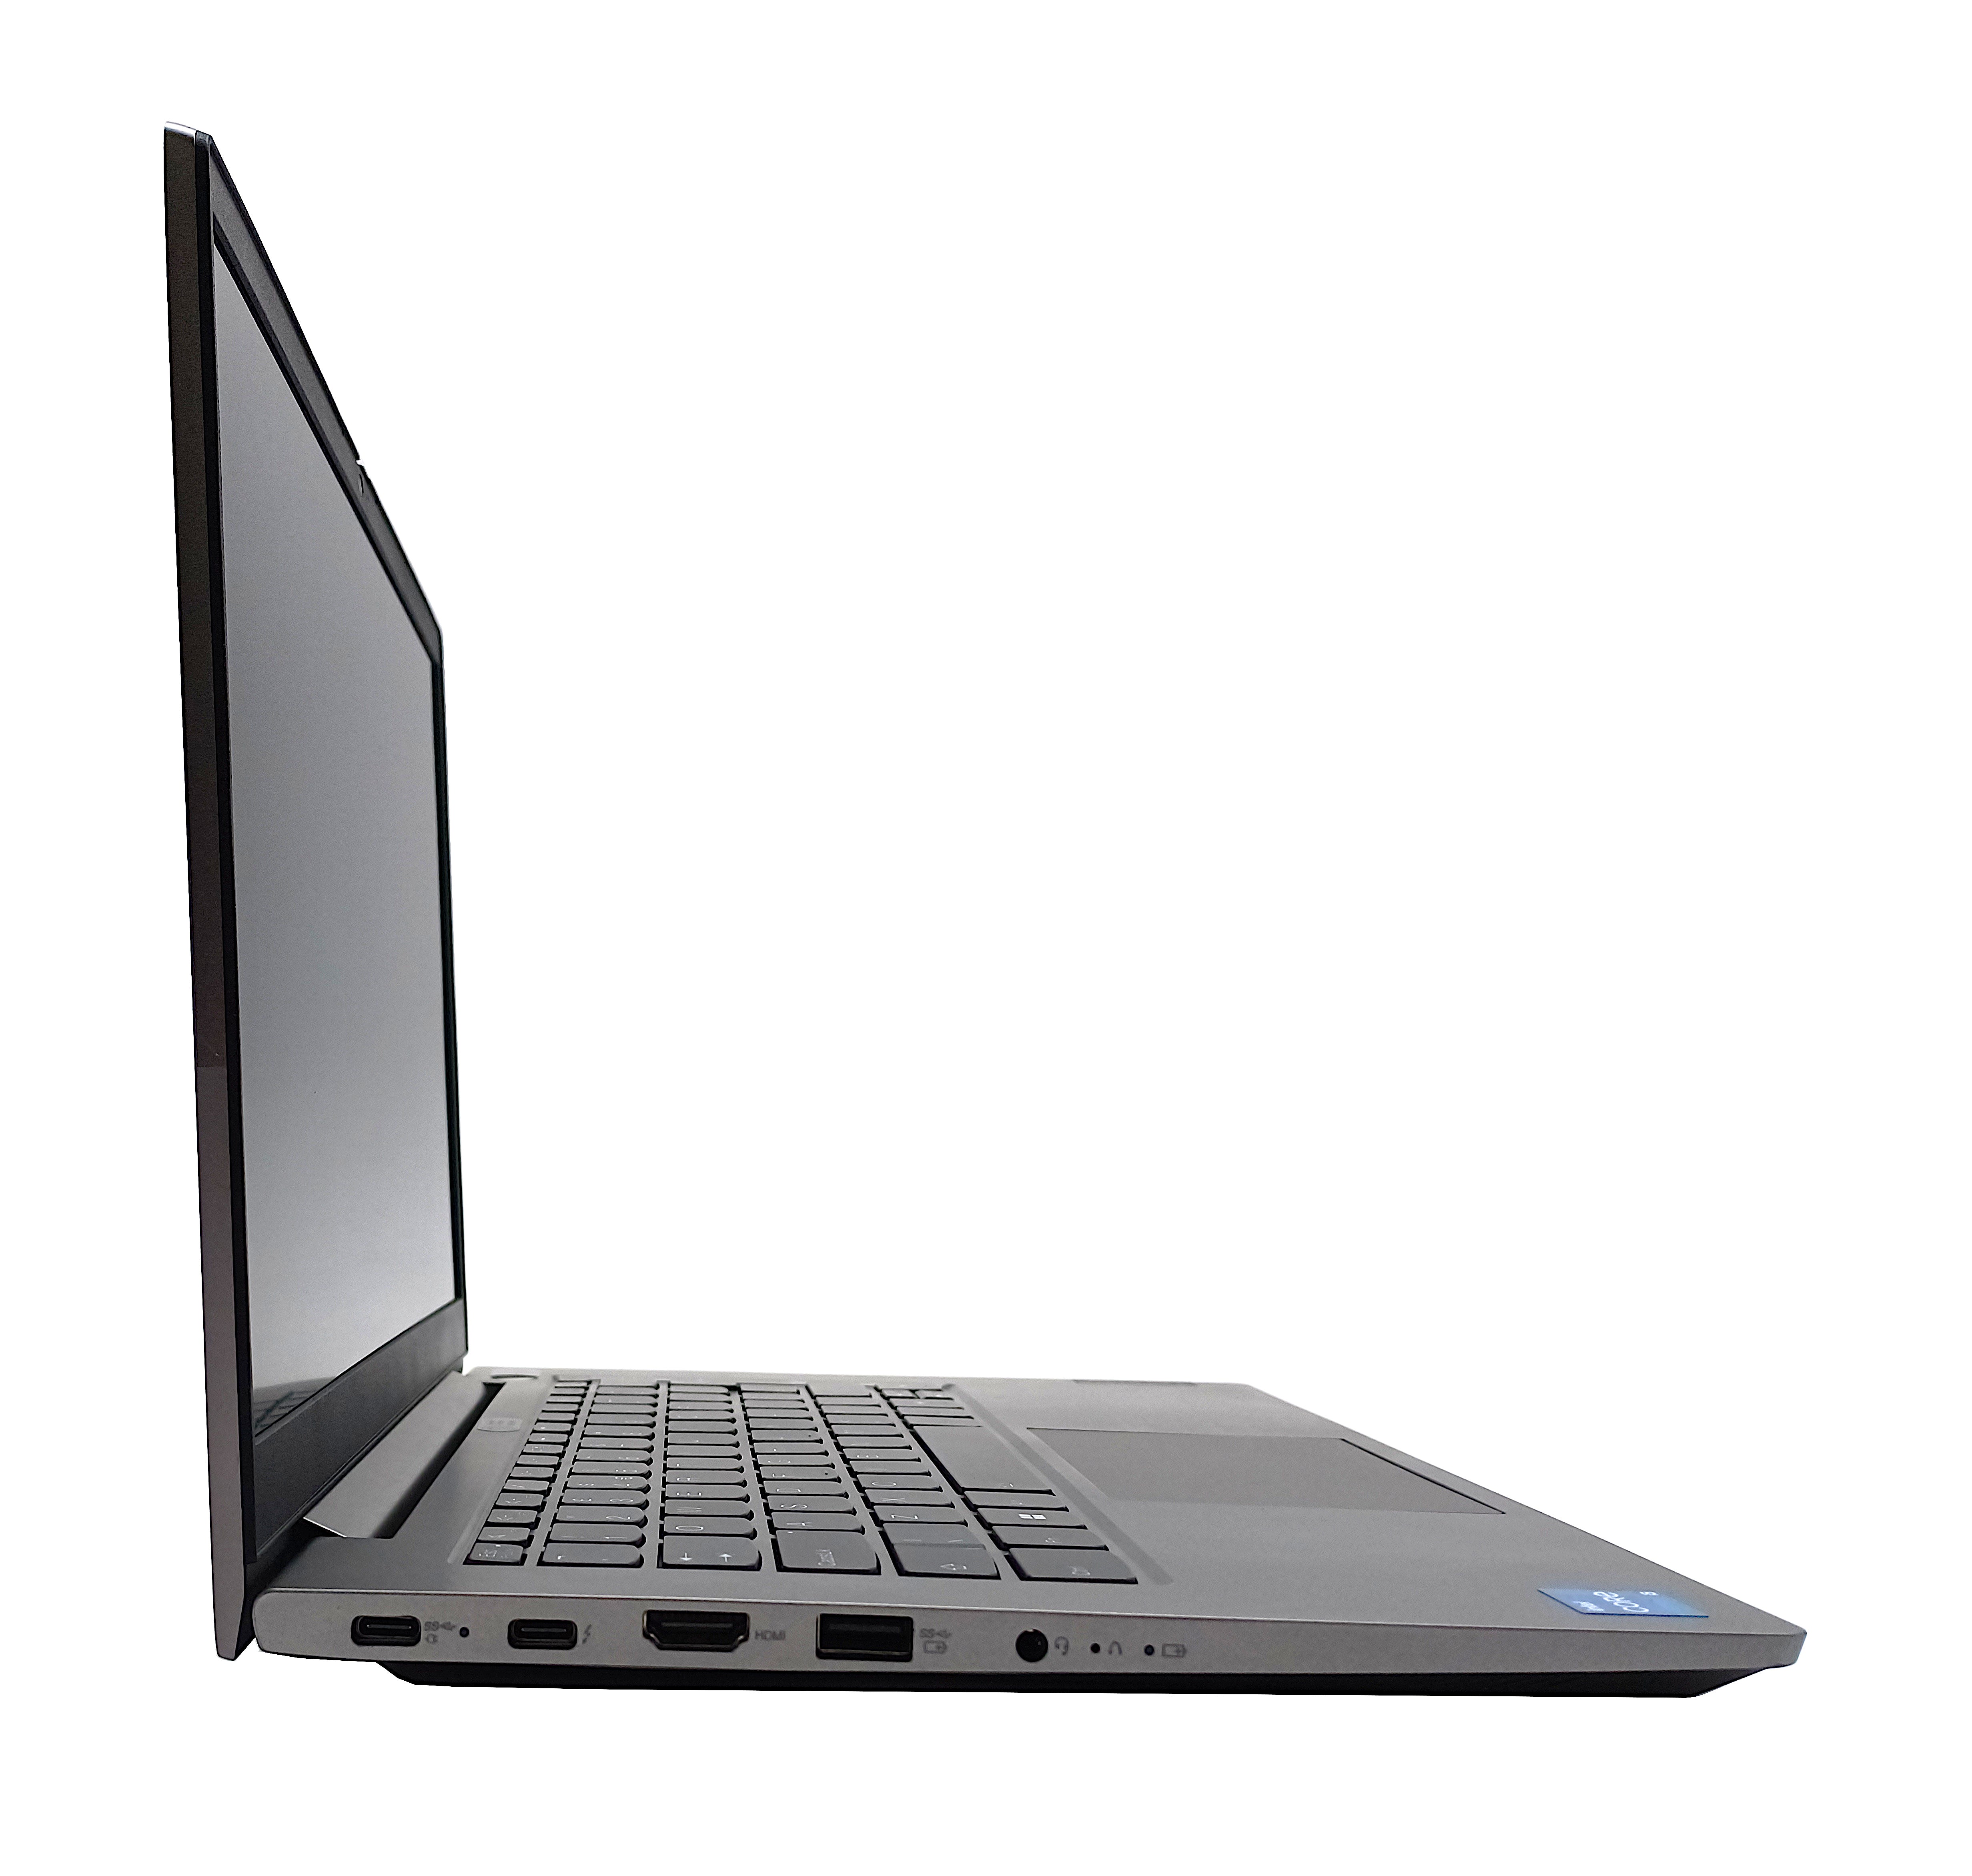 Lenovo Thinkbook 14 G2 Laptop, 14" Core i5 11th Gen, 8GB RAM, 256GB SSD